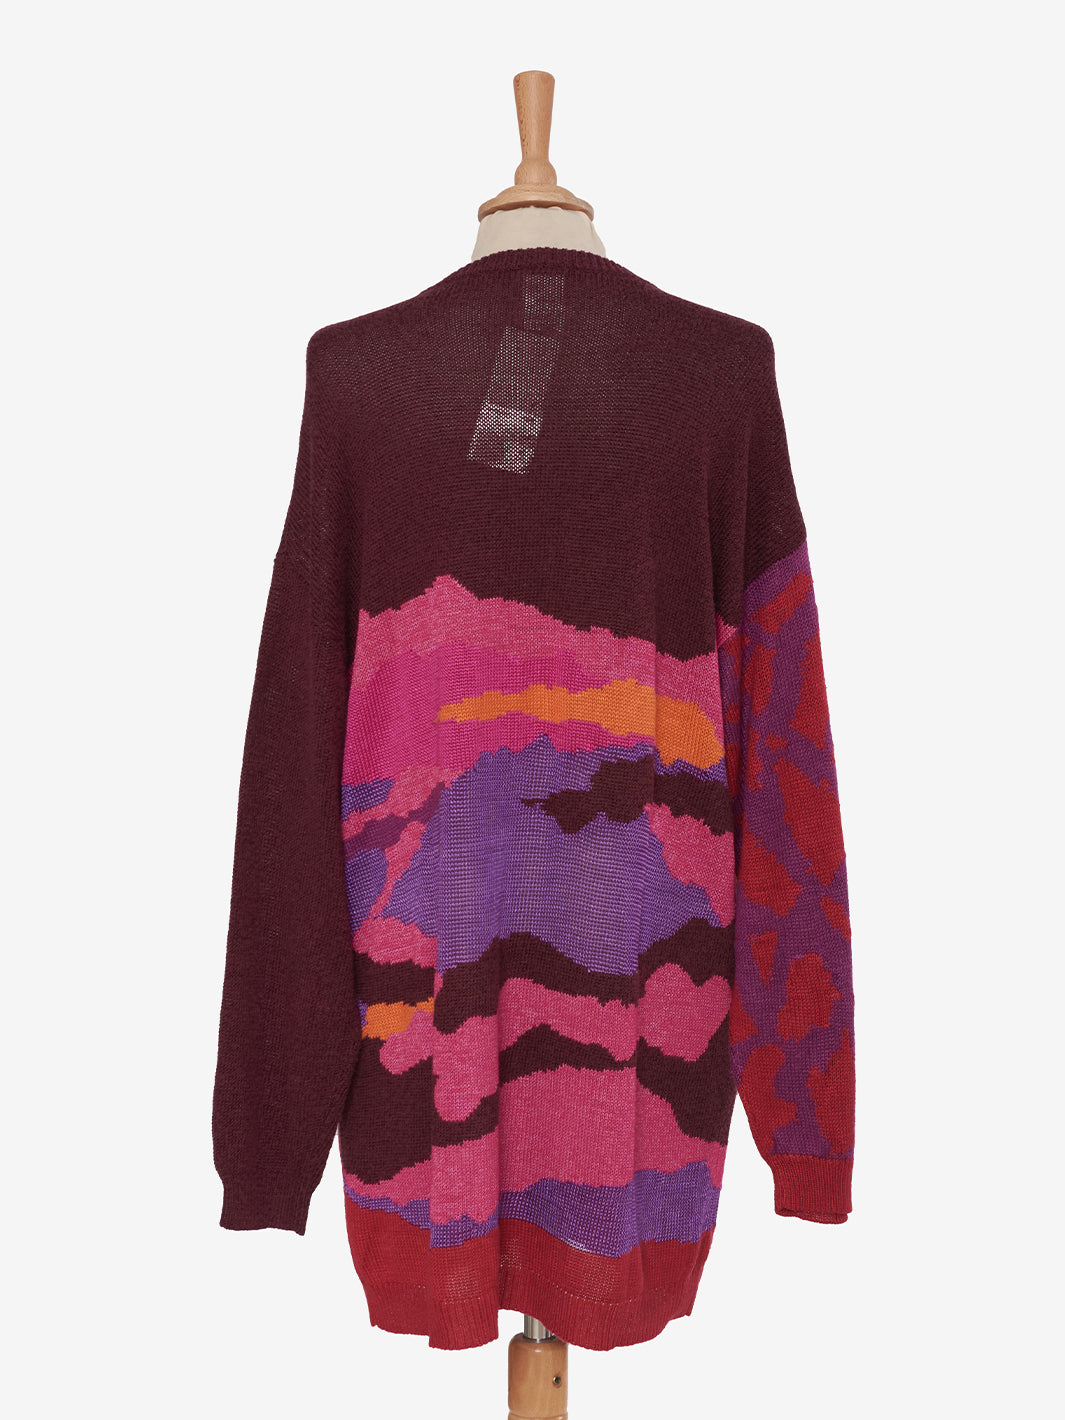 Krizia sweater with giraffe embroidery